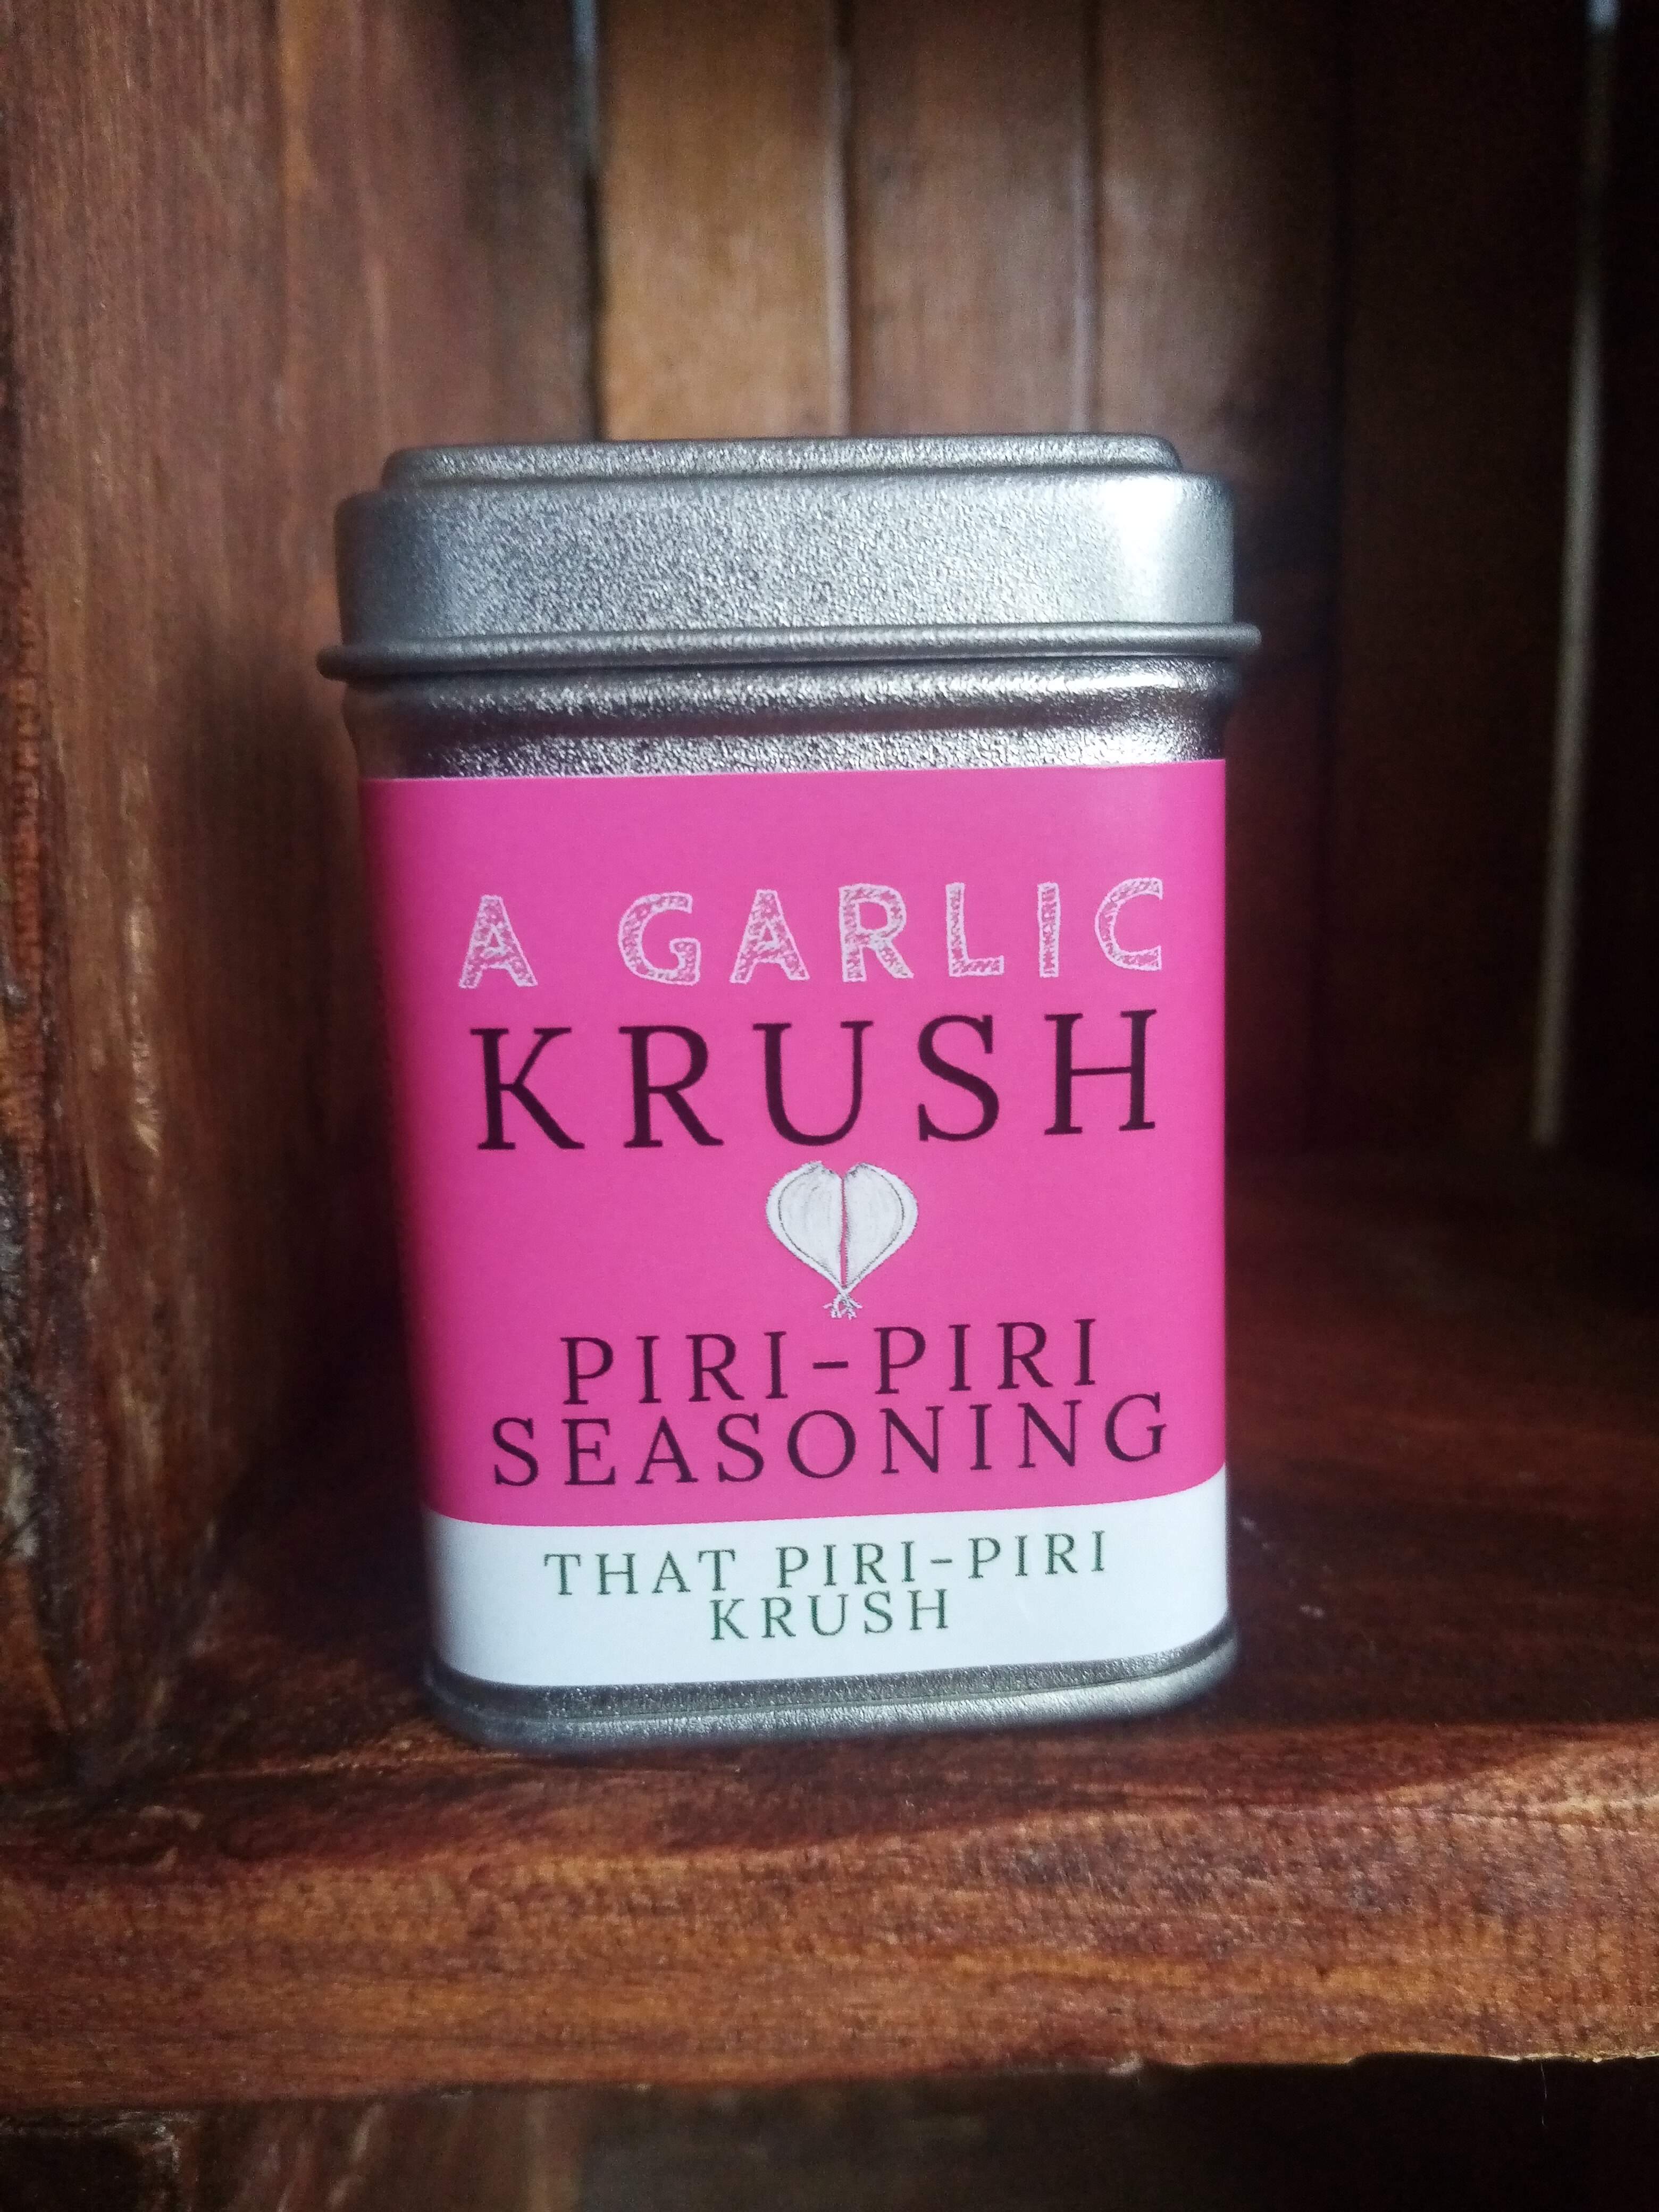 That Piri-Piri Krush